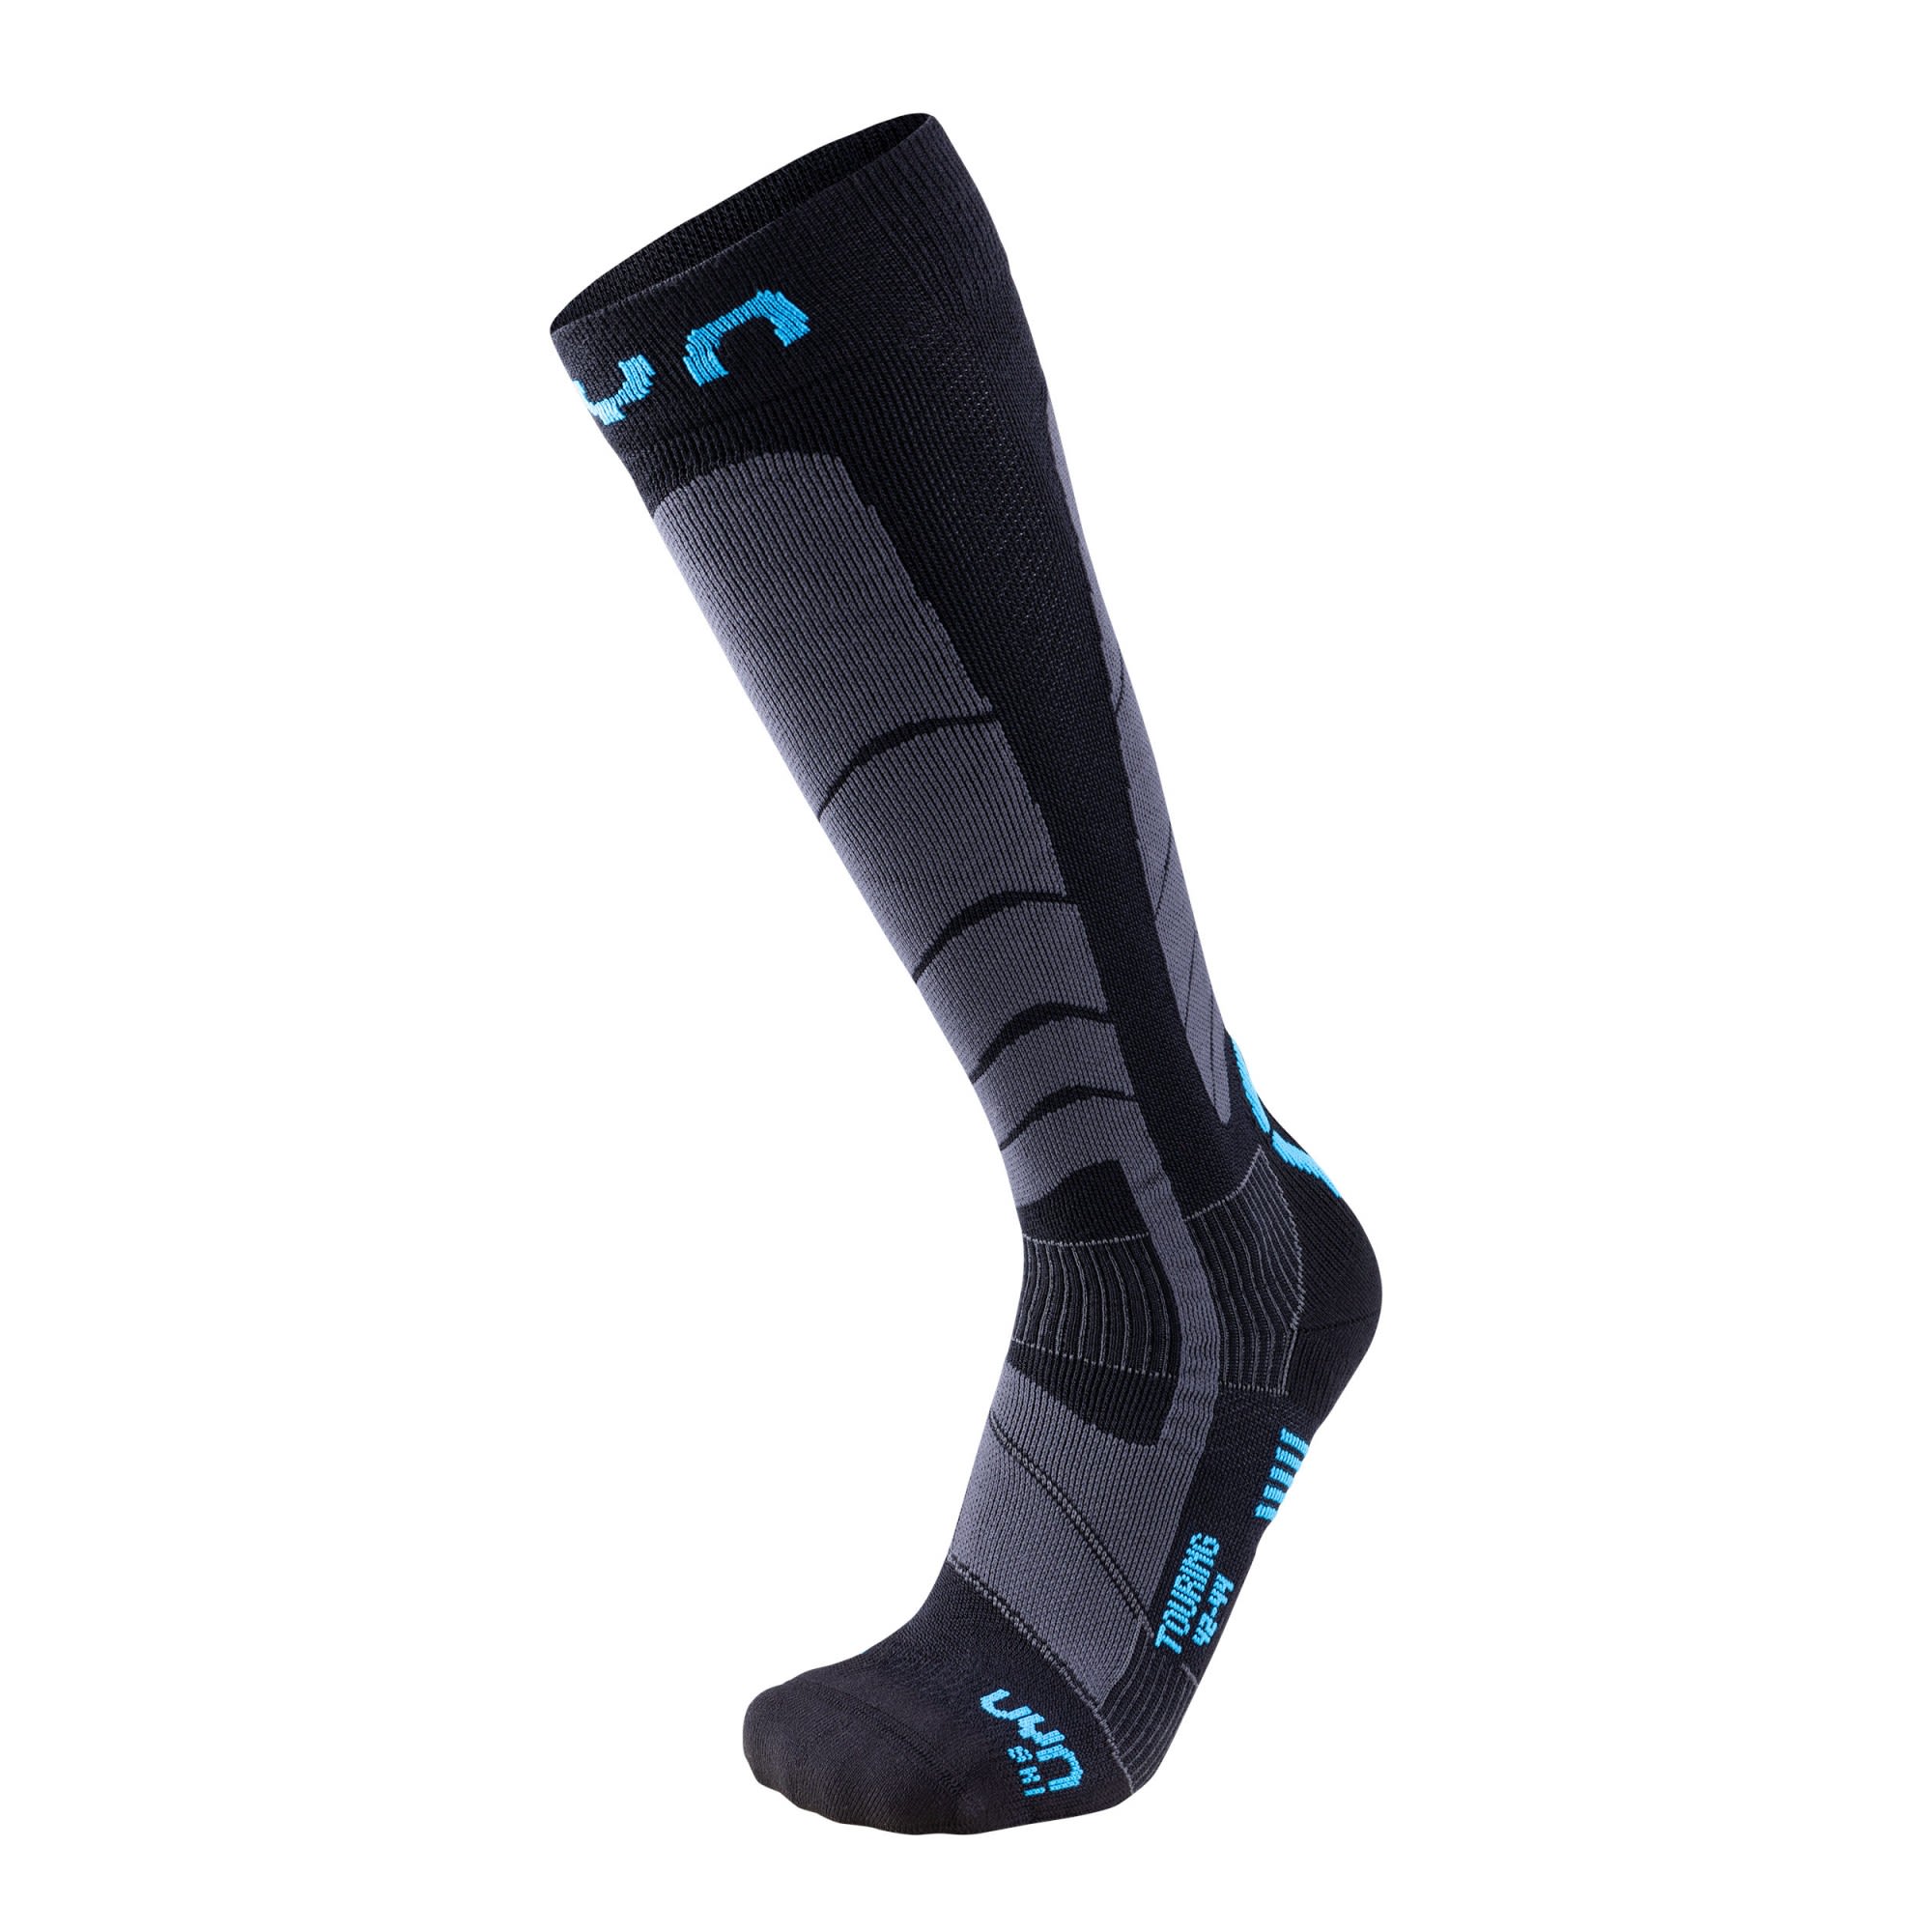 Uyn Komfortable funktionale Herren Skitouren Socken Black - Azure